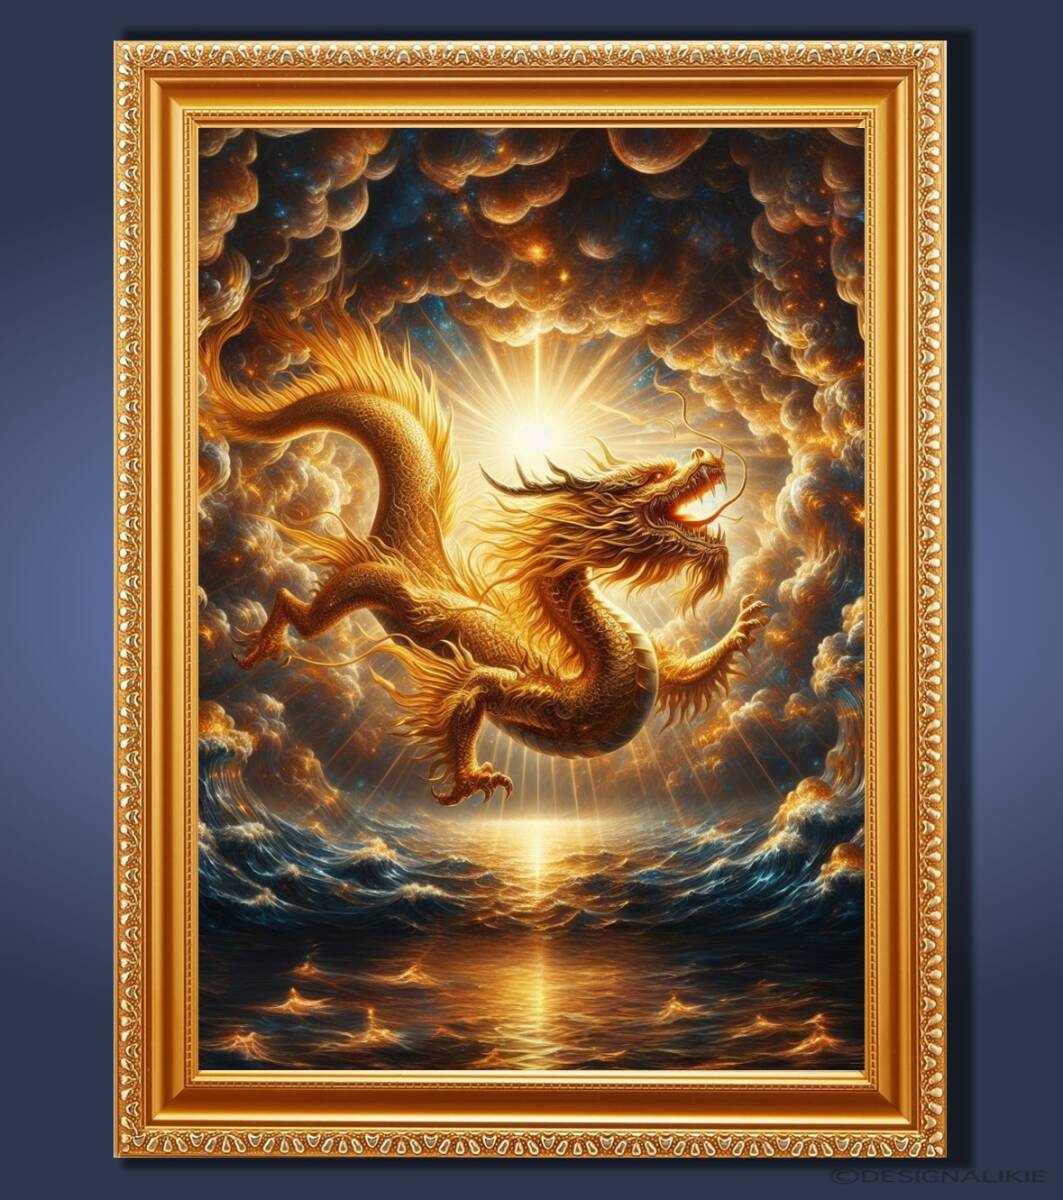 एक चमकता हुआ सुनहरा ड्रैगन अंधेरी रात को रोशन करता हुआ फ़्रेमयुक्त ग्राफ़िक आध्यात्मिक कला, कलाकृति, चित्रकारी, अन्य